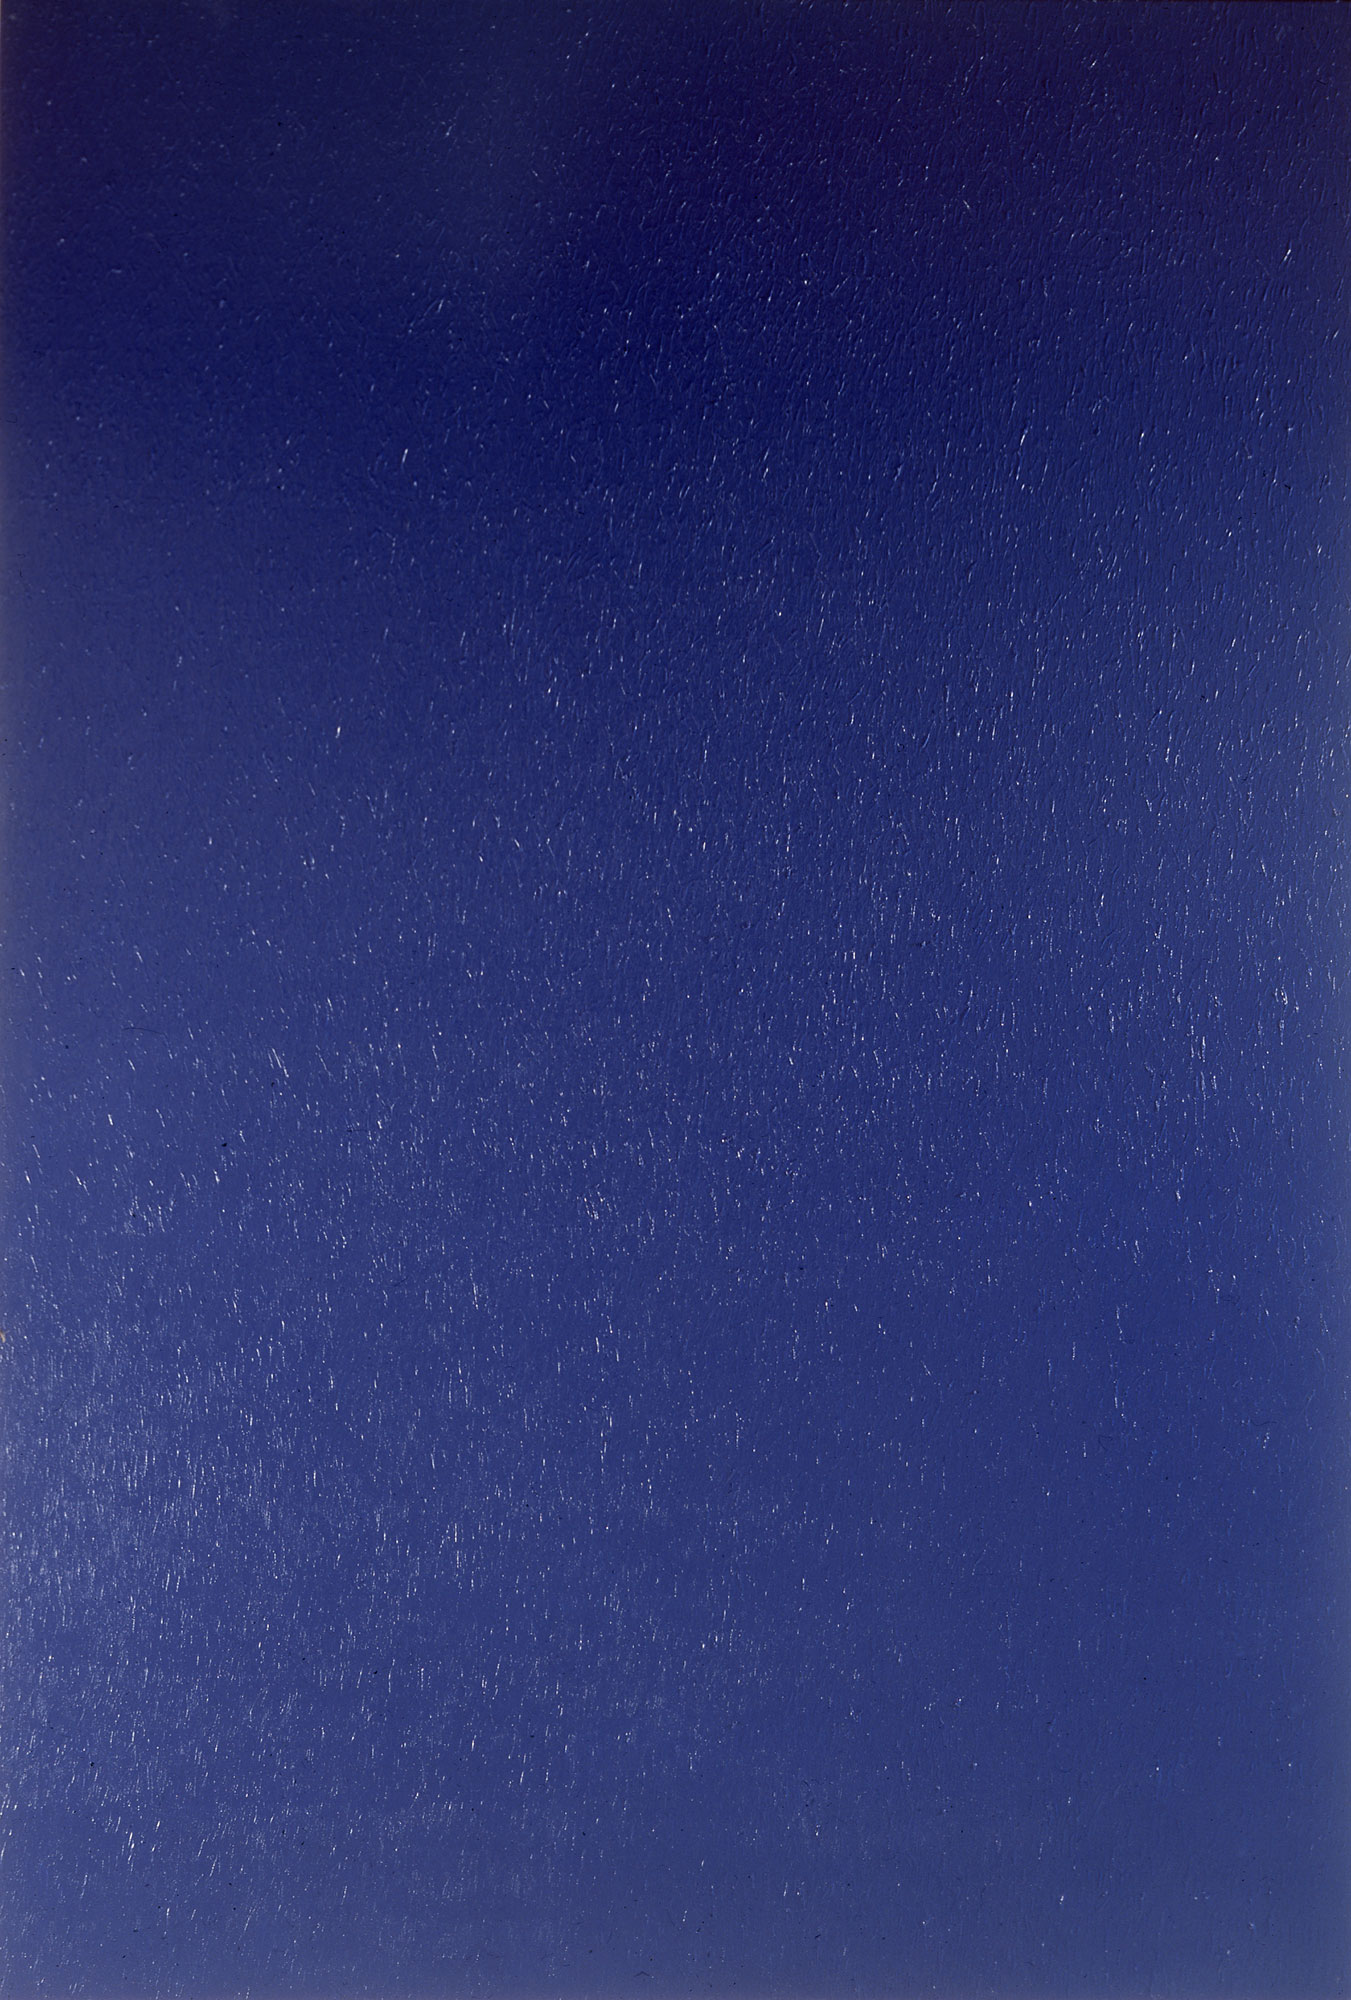 Kenneth Dingwall, Edinburgh Blue, 1976, acrylic on canvas, 160cm x 109cm